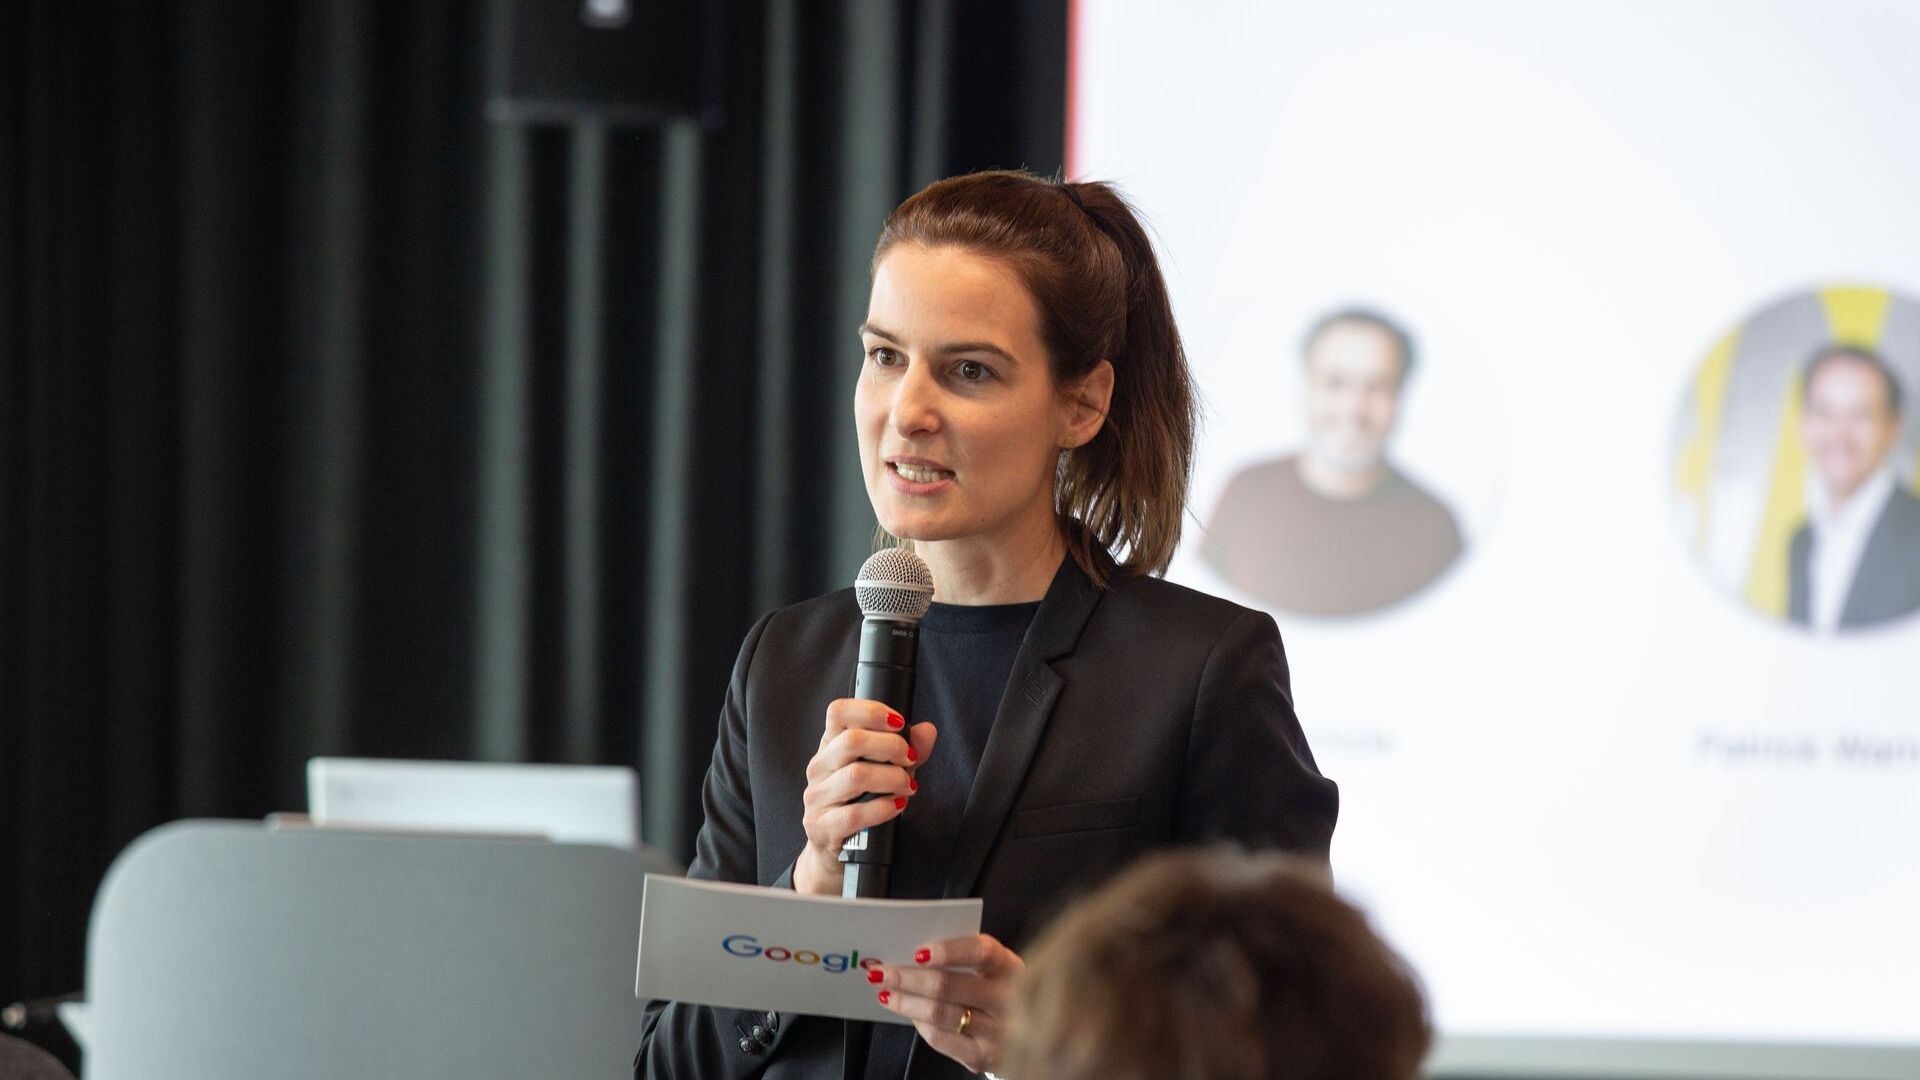 Pia De Carli، تیم رسانه ای Google Switzerland، در افتتاحیه رسمی پردیس جدید Google Europaallee در زوریخ در 27 ژوئن 2022 شرکت کرد.